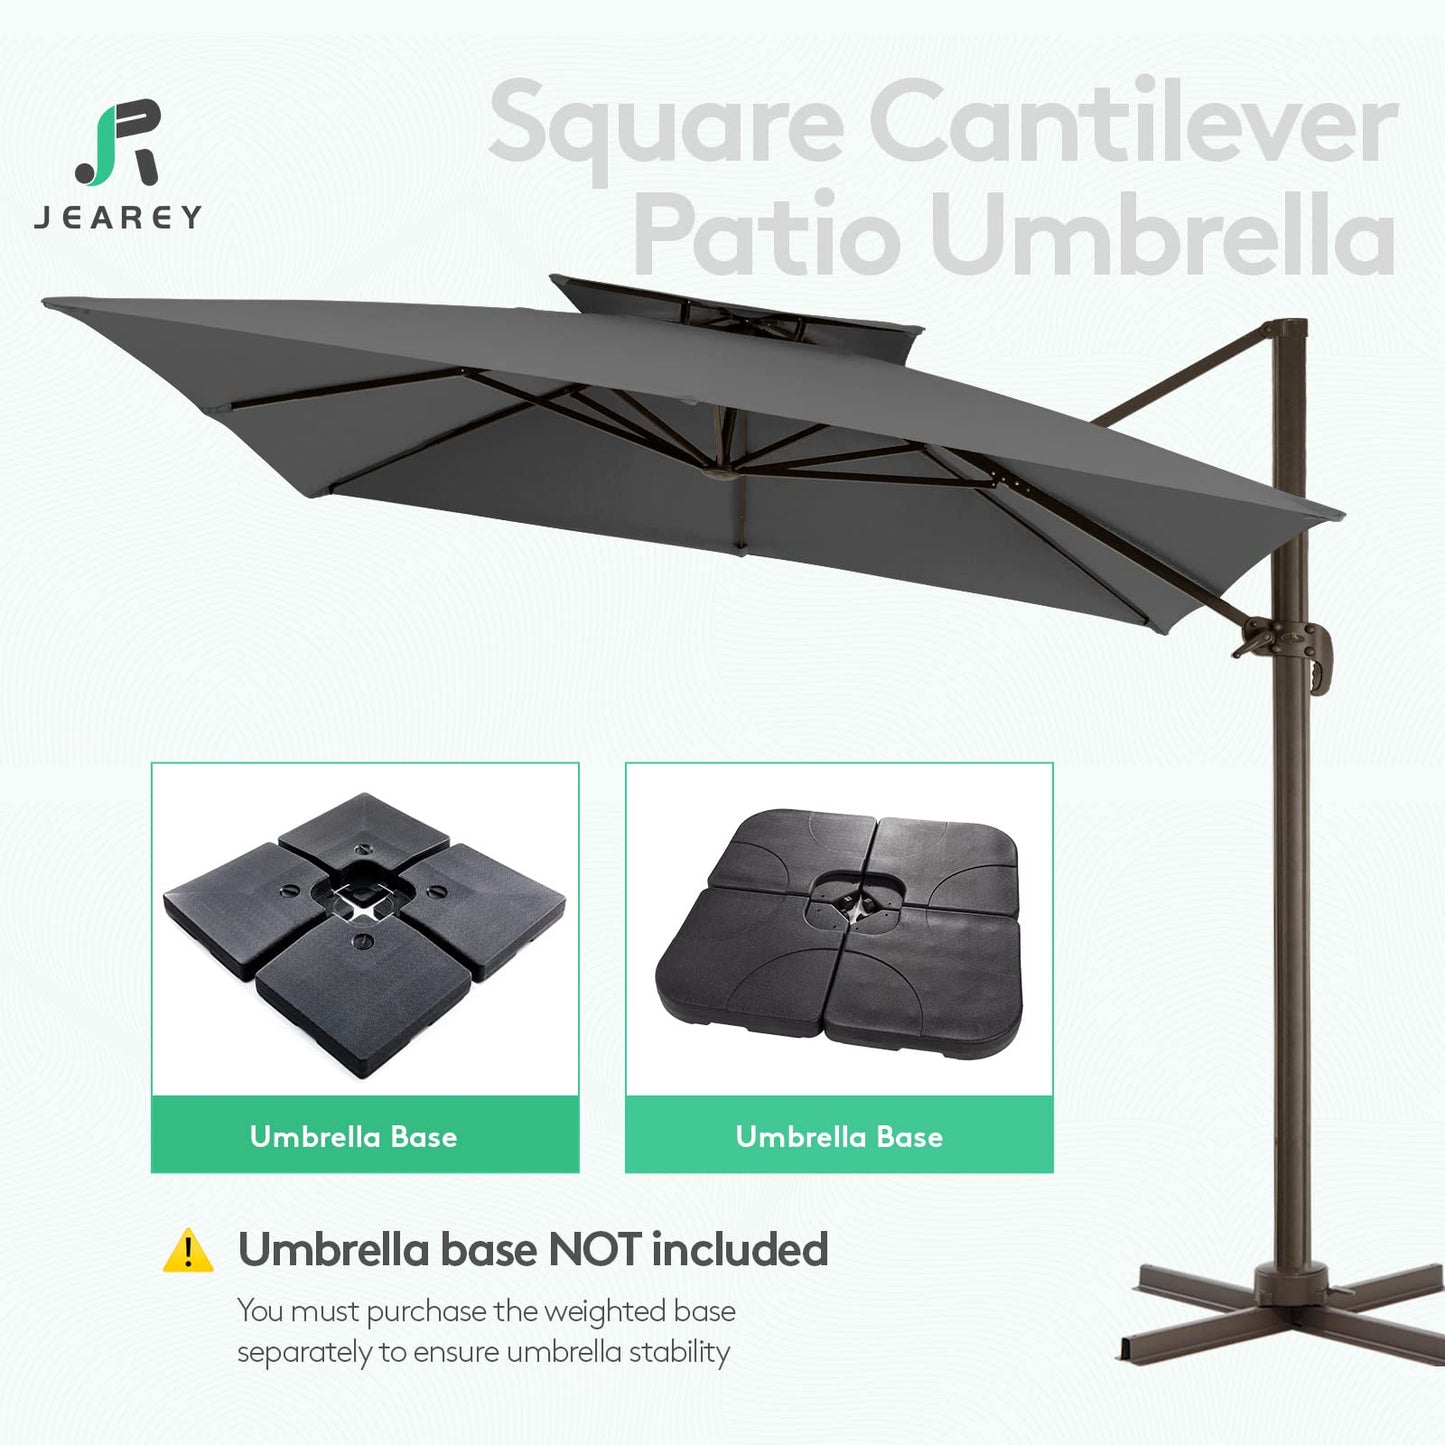 Square Cantilever Patio Umbrella 12FT GREY